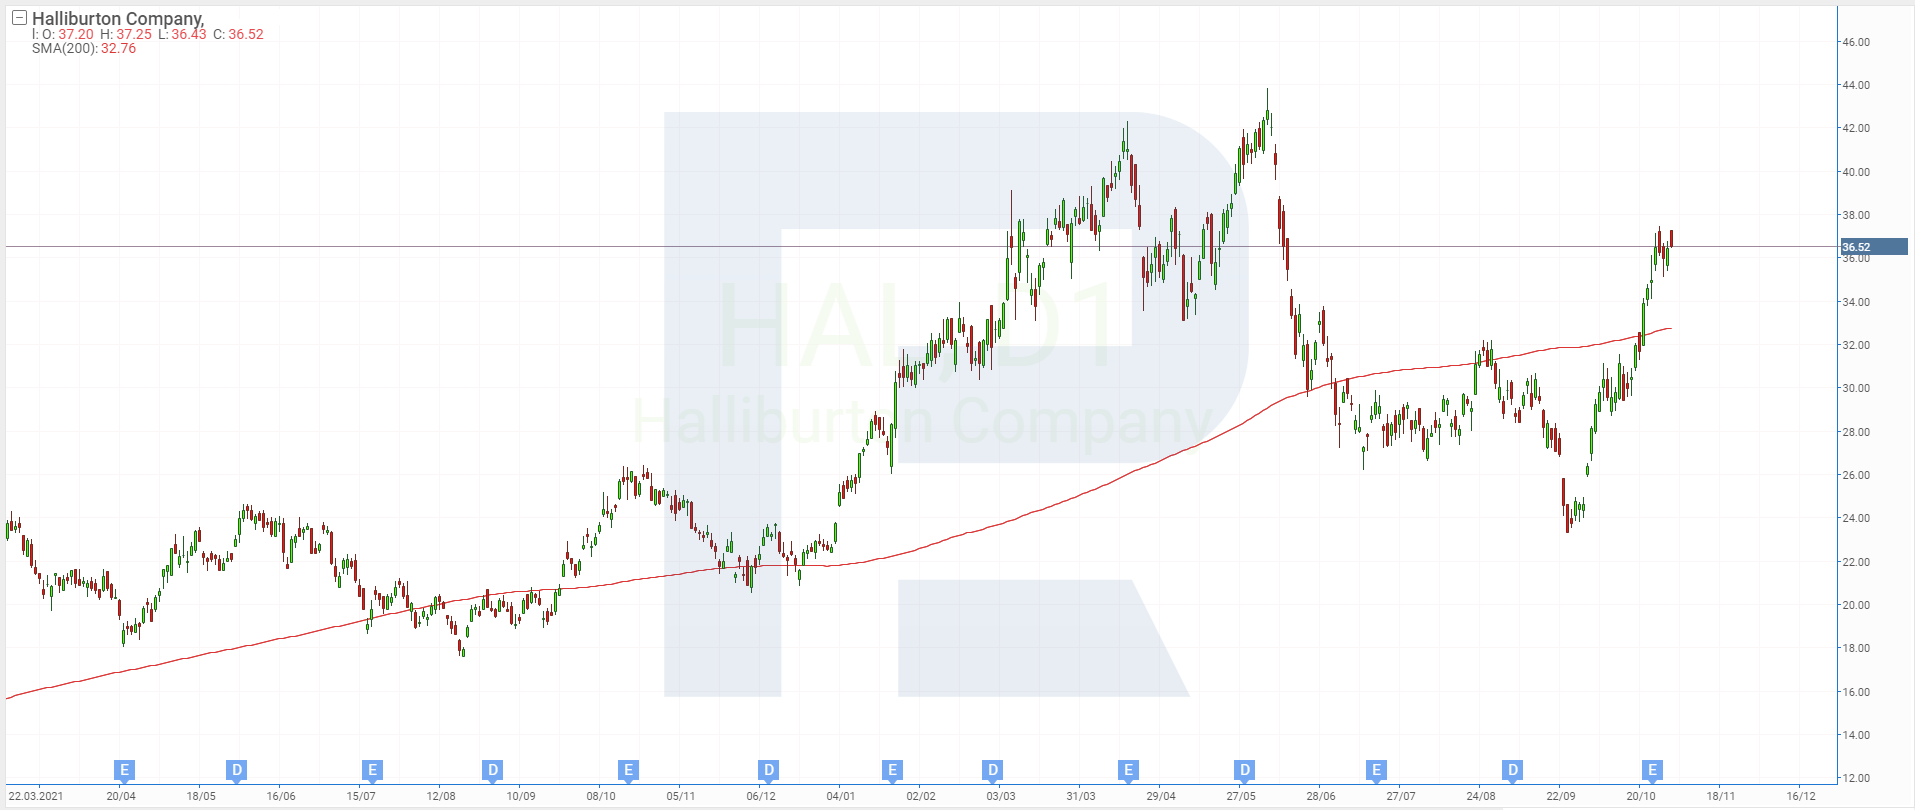 Share price charts of Halliburton Company